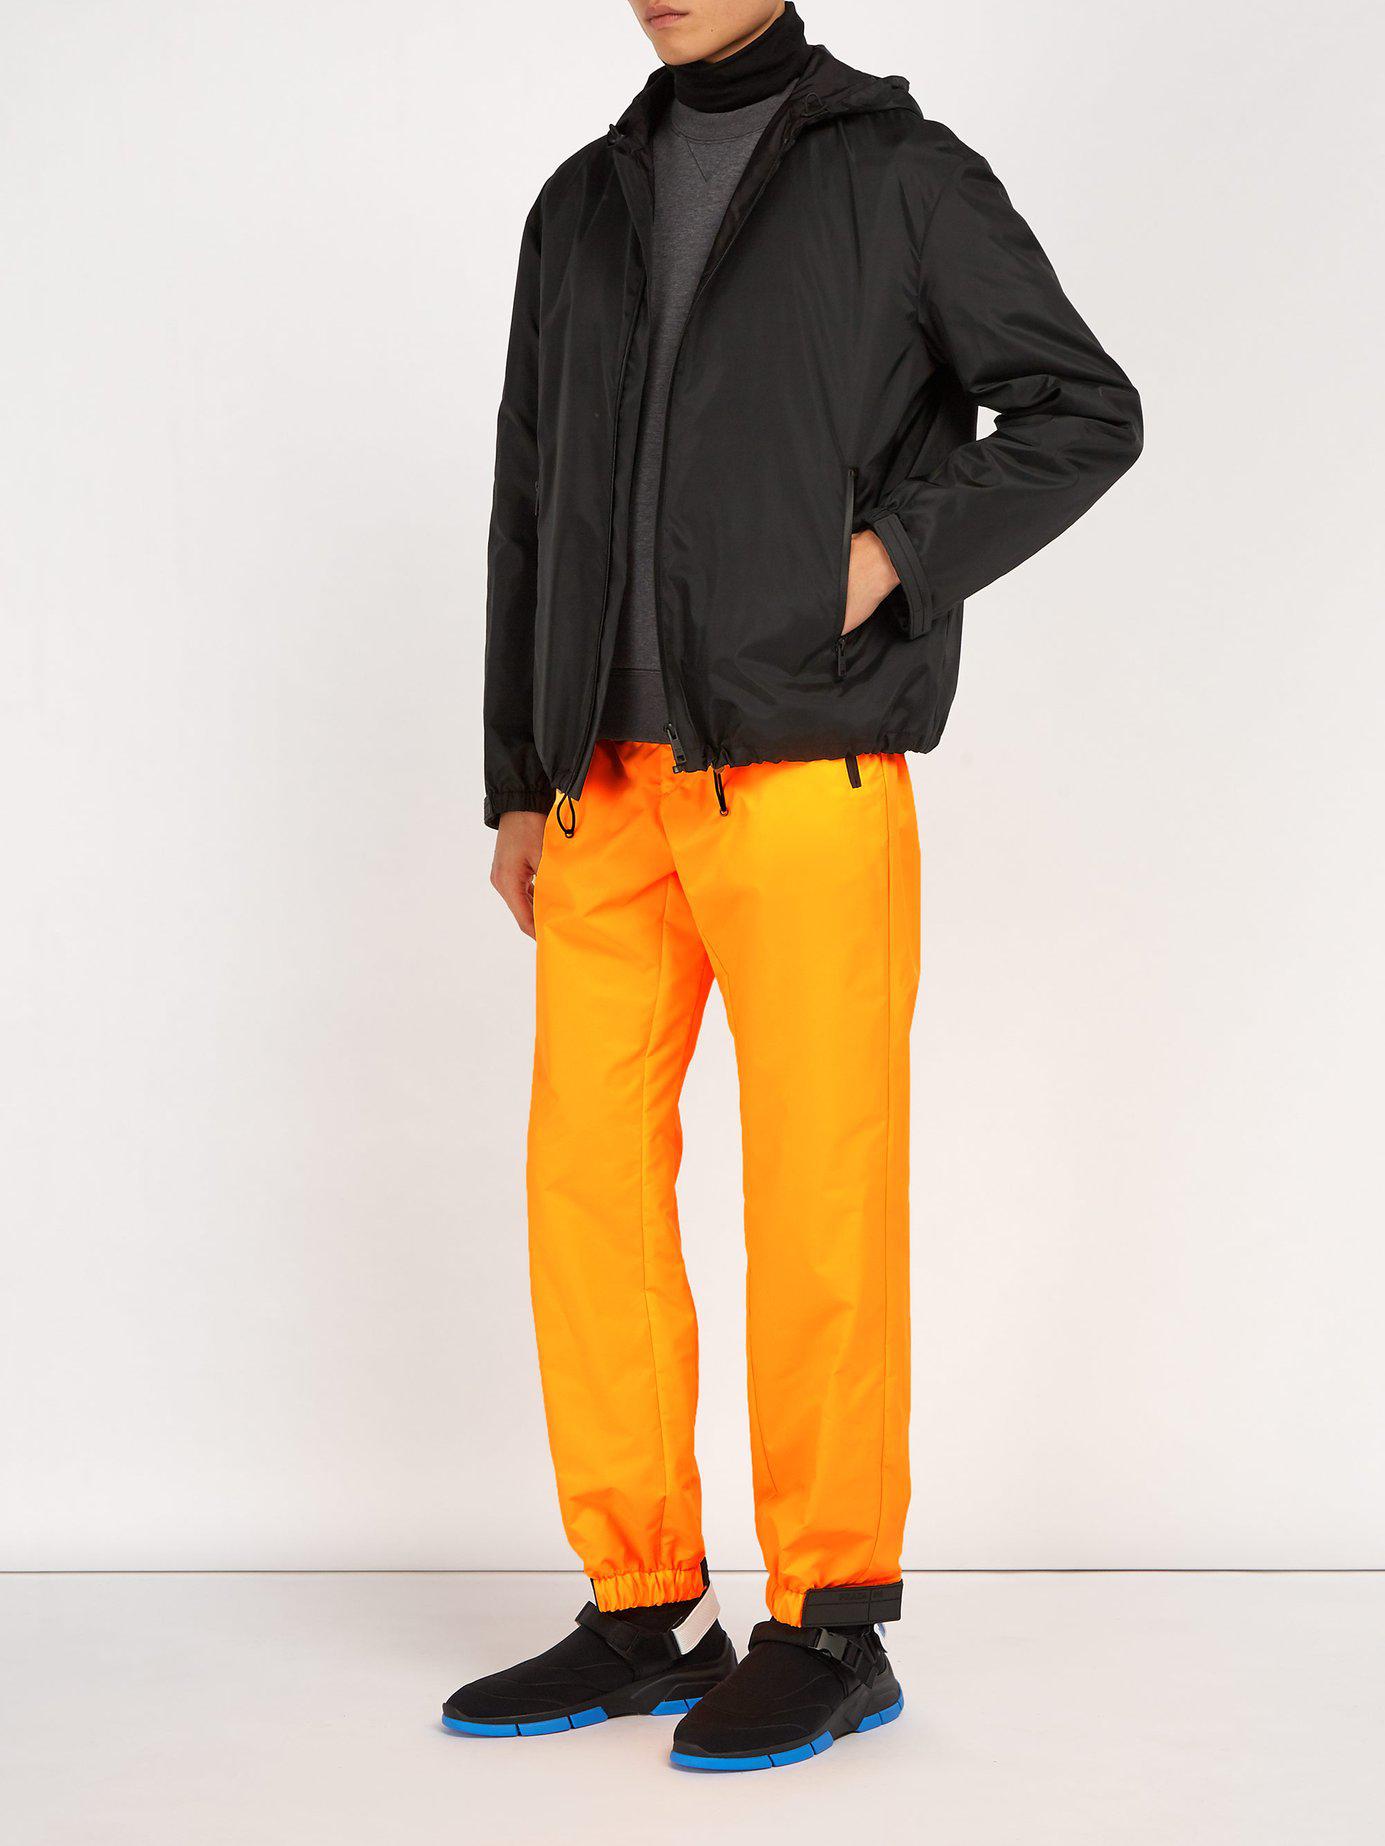 prada orange pants